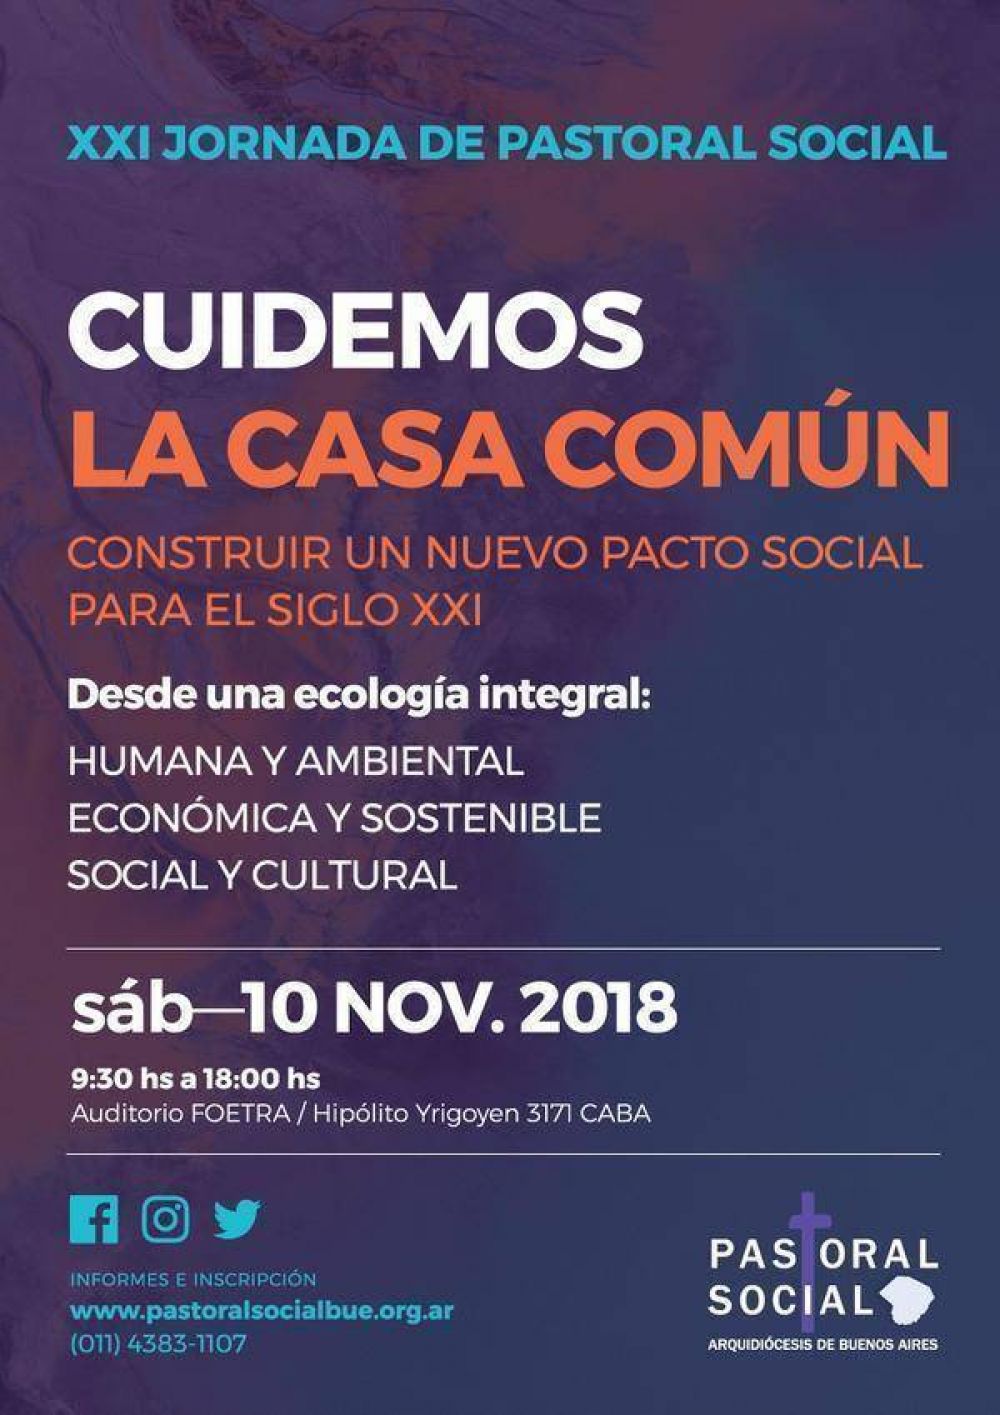 Inscriben en la XXI Jornada de Pastoral Social de Buenos Aires